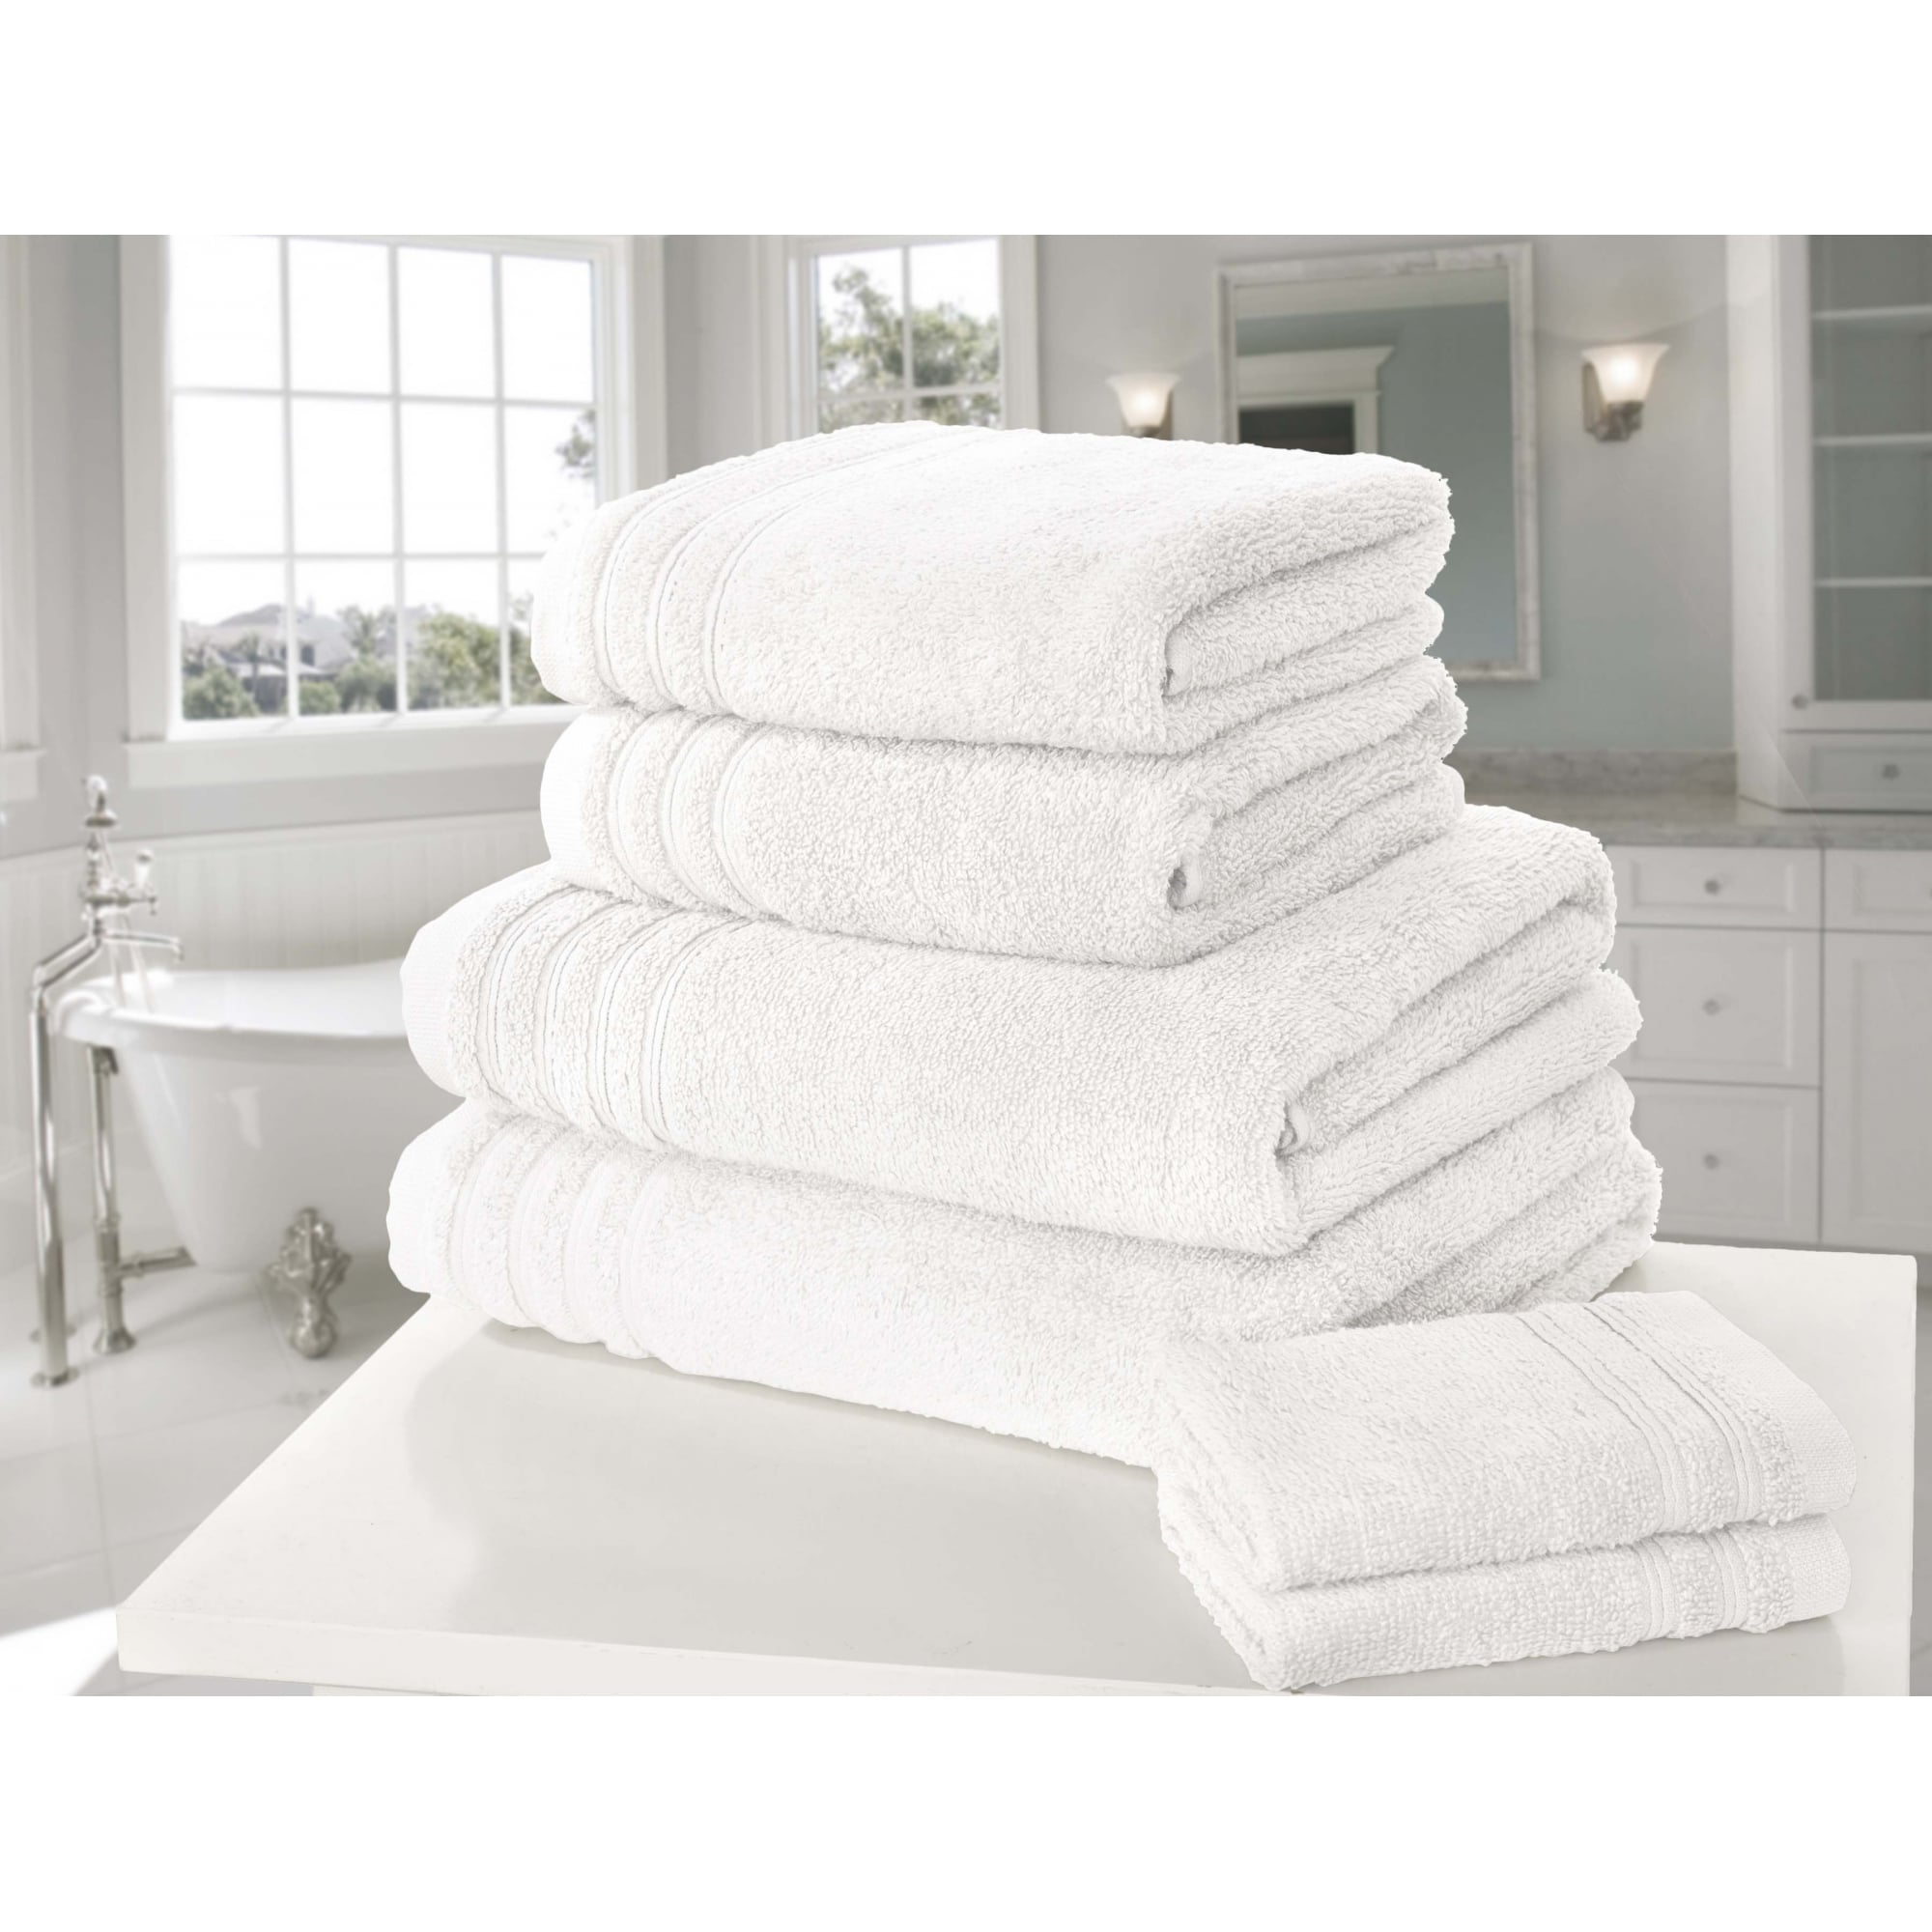 Lewis’s  So Soft Zero Twist Towel Range - White - Bath Sheet  | TJ Hughes